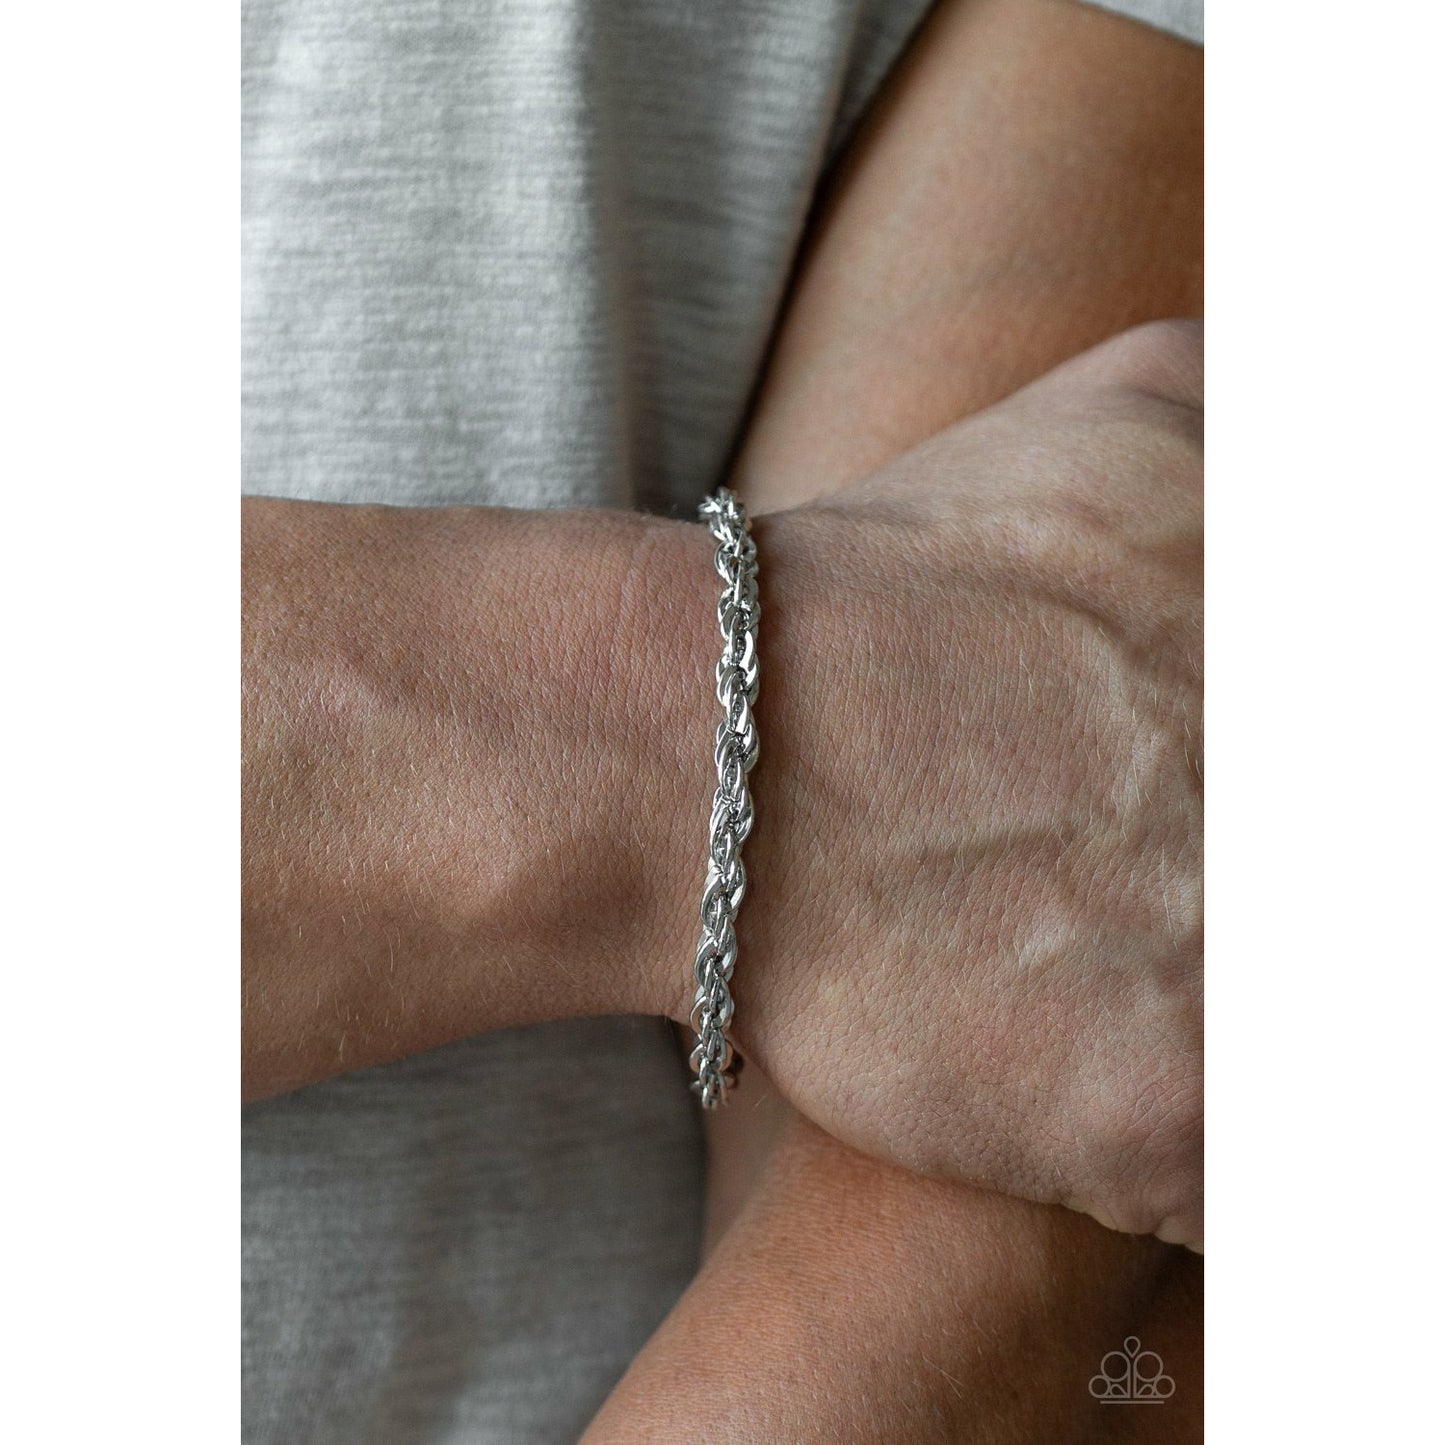 Last Lap - Silver bracelet